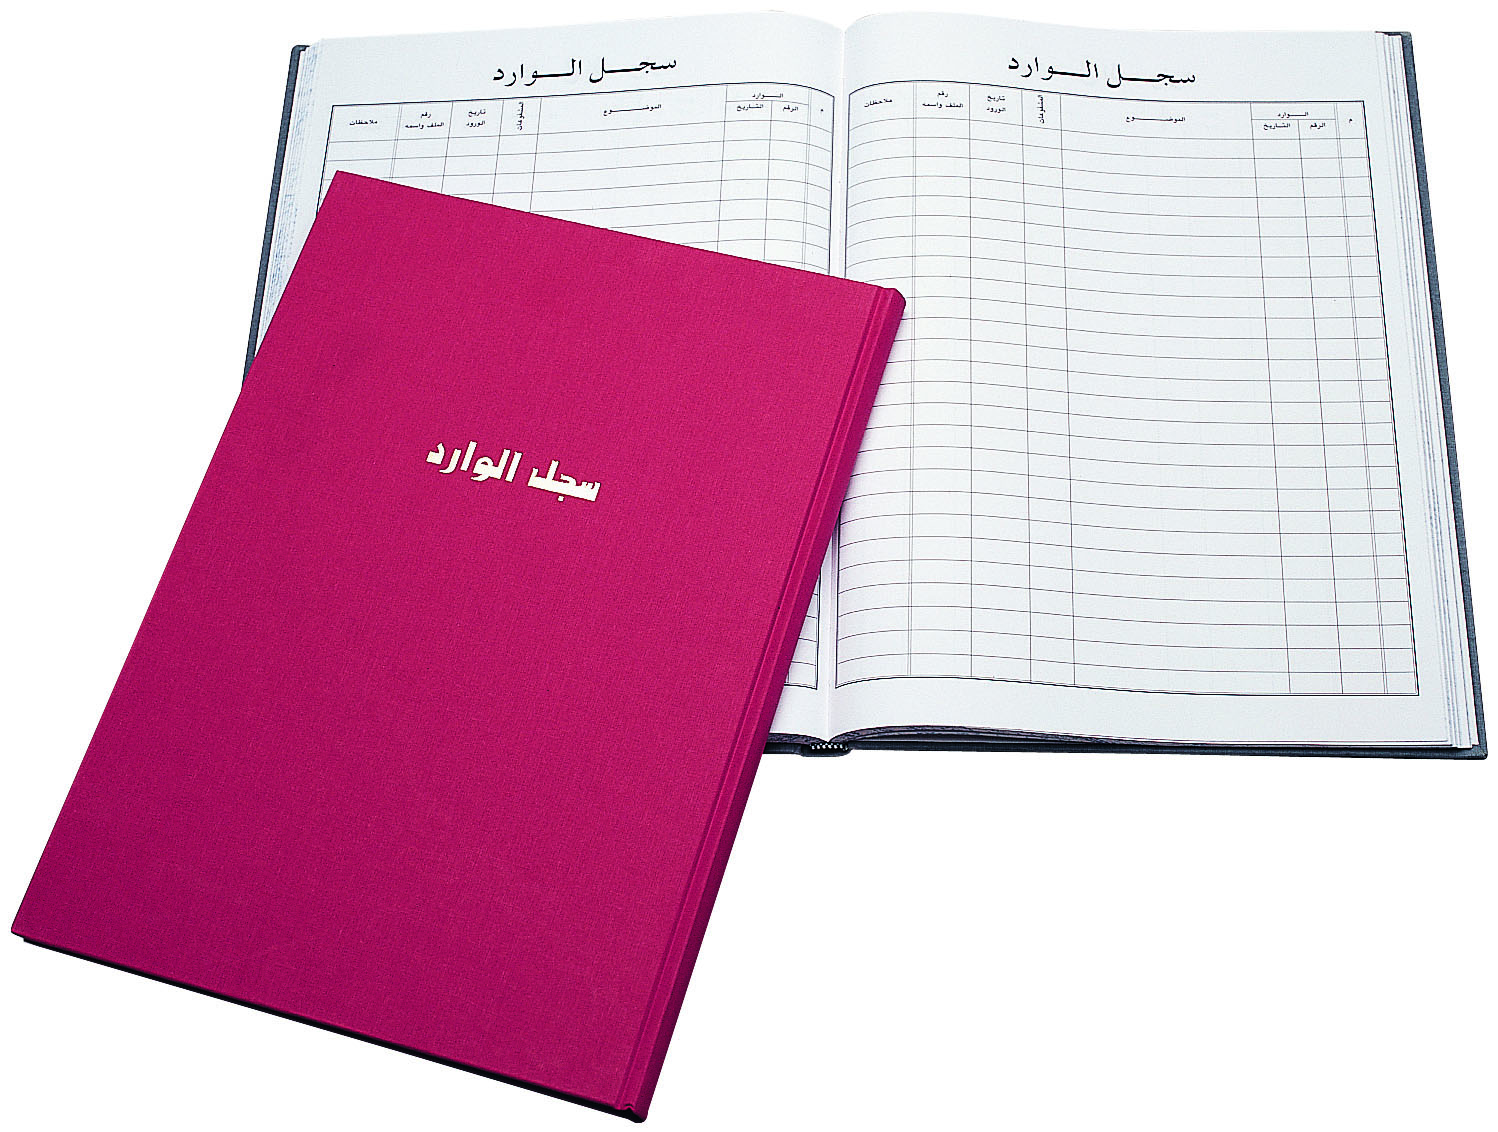 +Incoming register 96 sheets(arabic) (Sejel Al Wared)